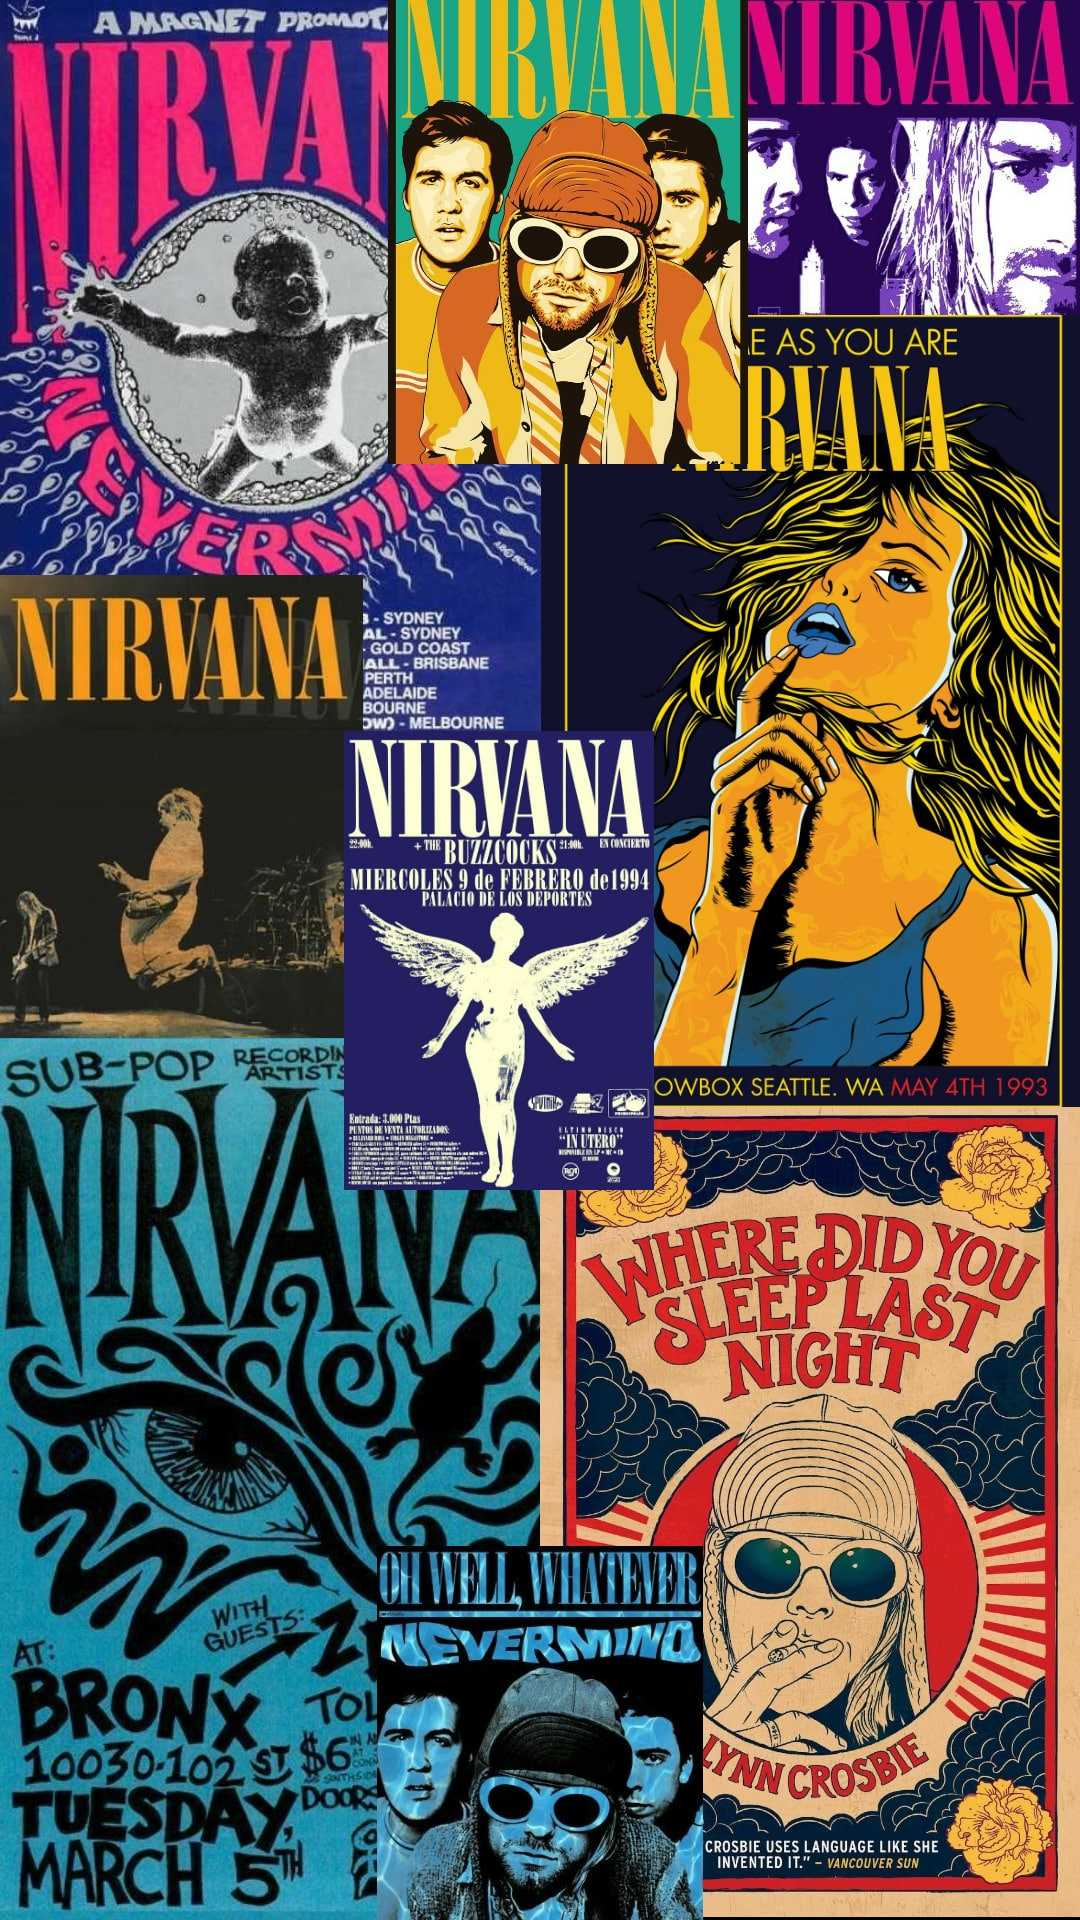 Nirvana Phone Wallpapers